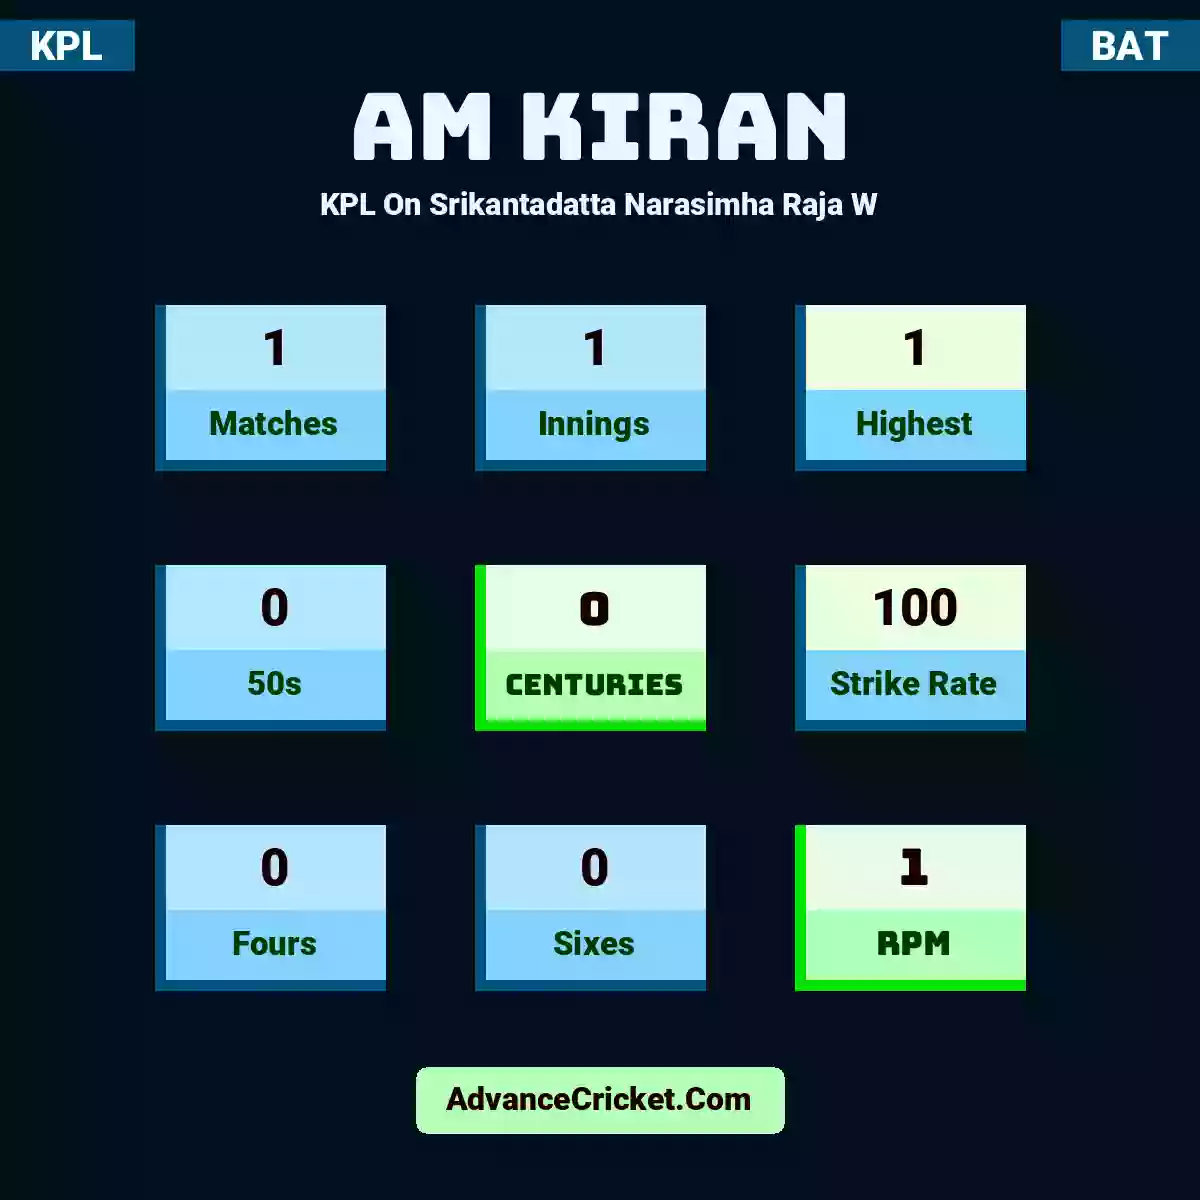 AM Kiran KPL  On Srikantadatta Narasimha Raja W, AM Kiran played 1 matches, scored 1 runs as highest, 0 half-centuries, and 0 centuries, with a strike rate of 100. A.Kiran hit 0 fours and 0 sixes, with an RPM of 1.